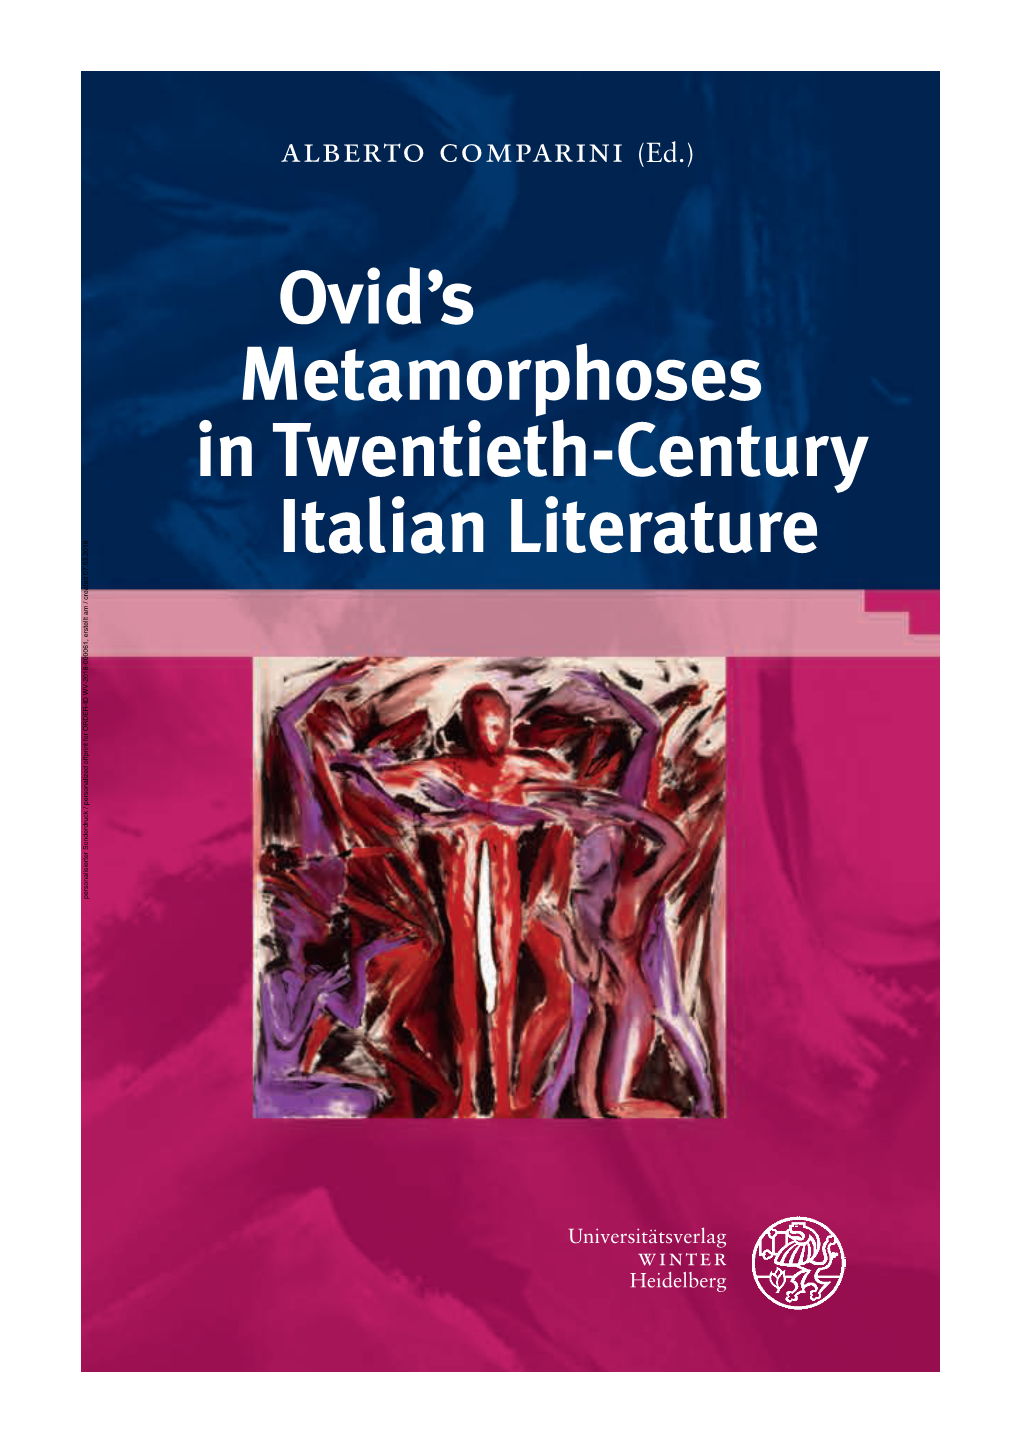 Ovid's Metamorphoses in Twentieth